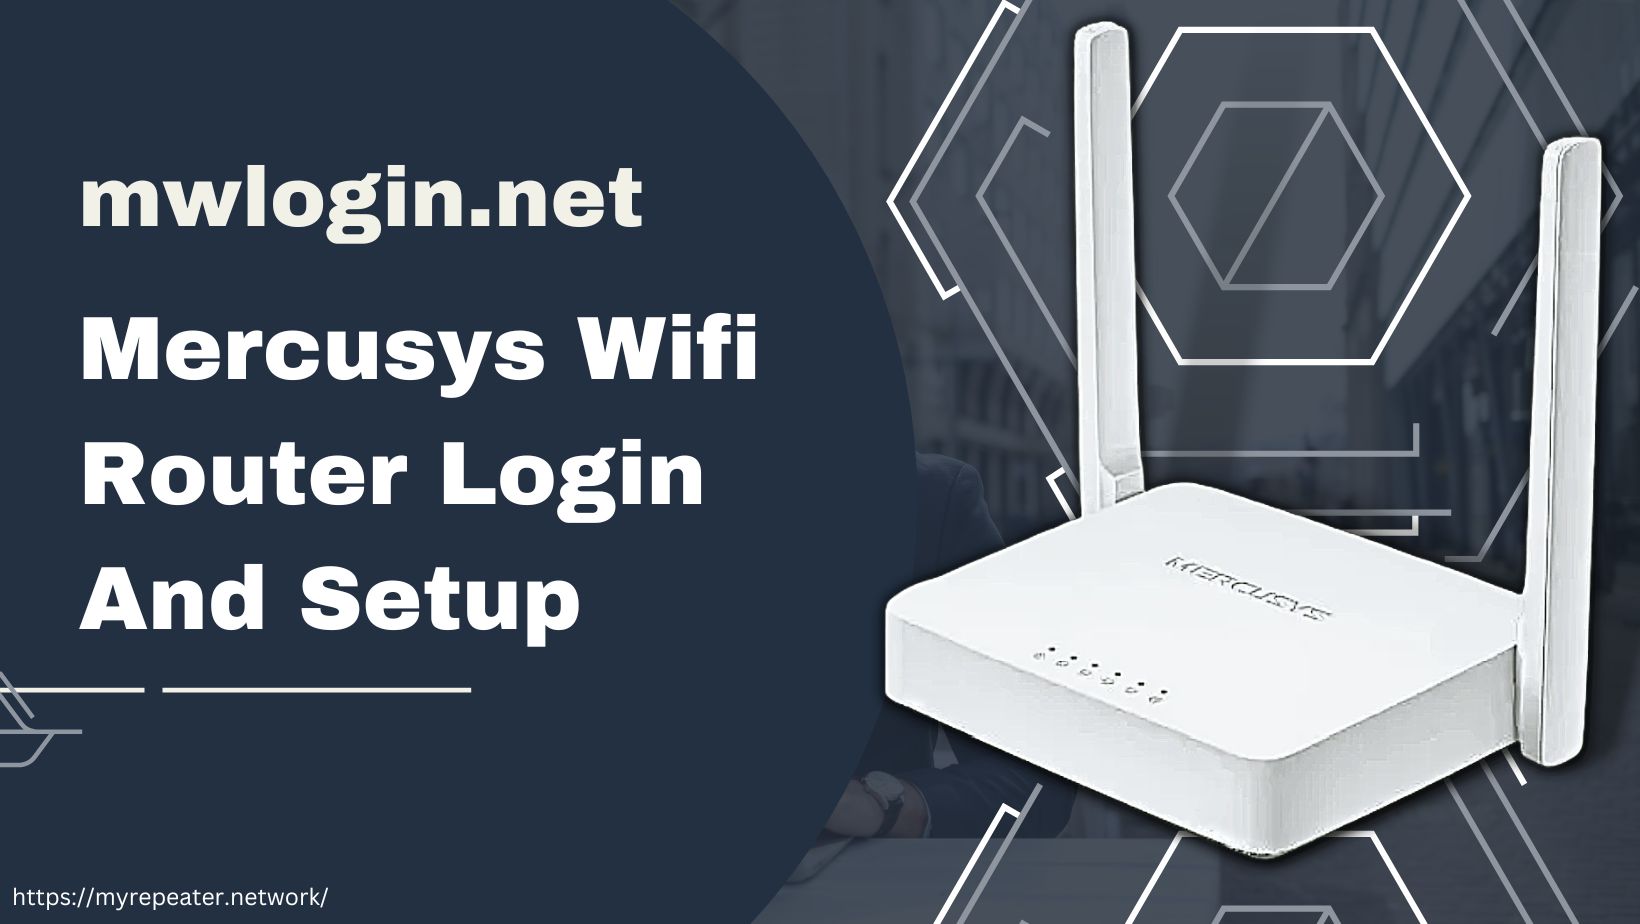 mwlogin.net MERCUSYS wifi router